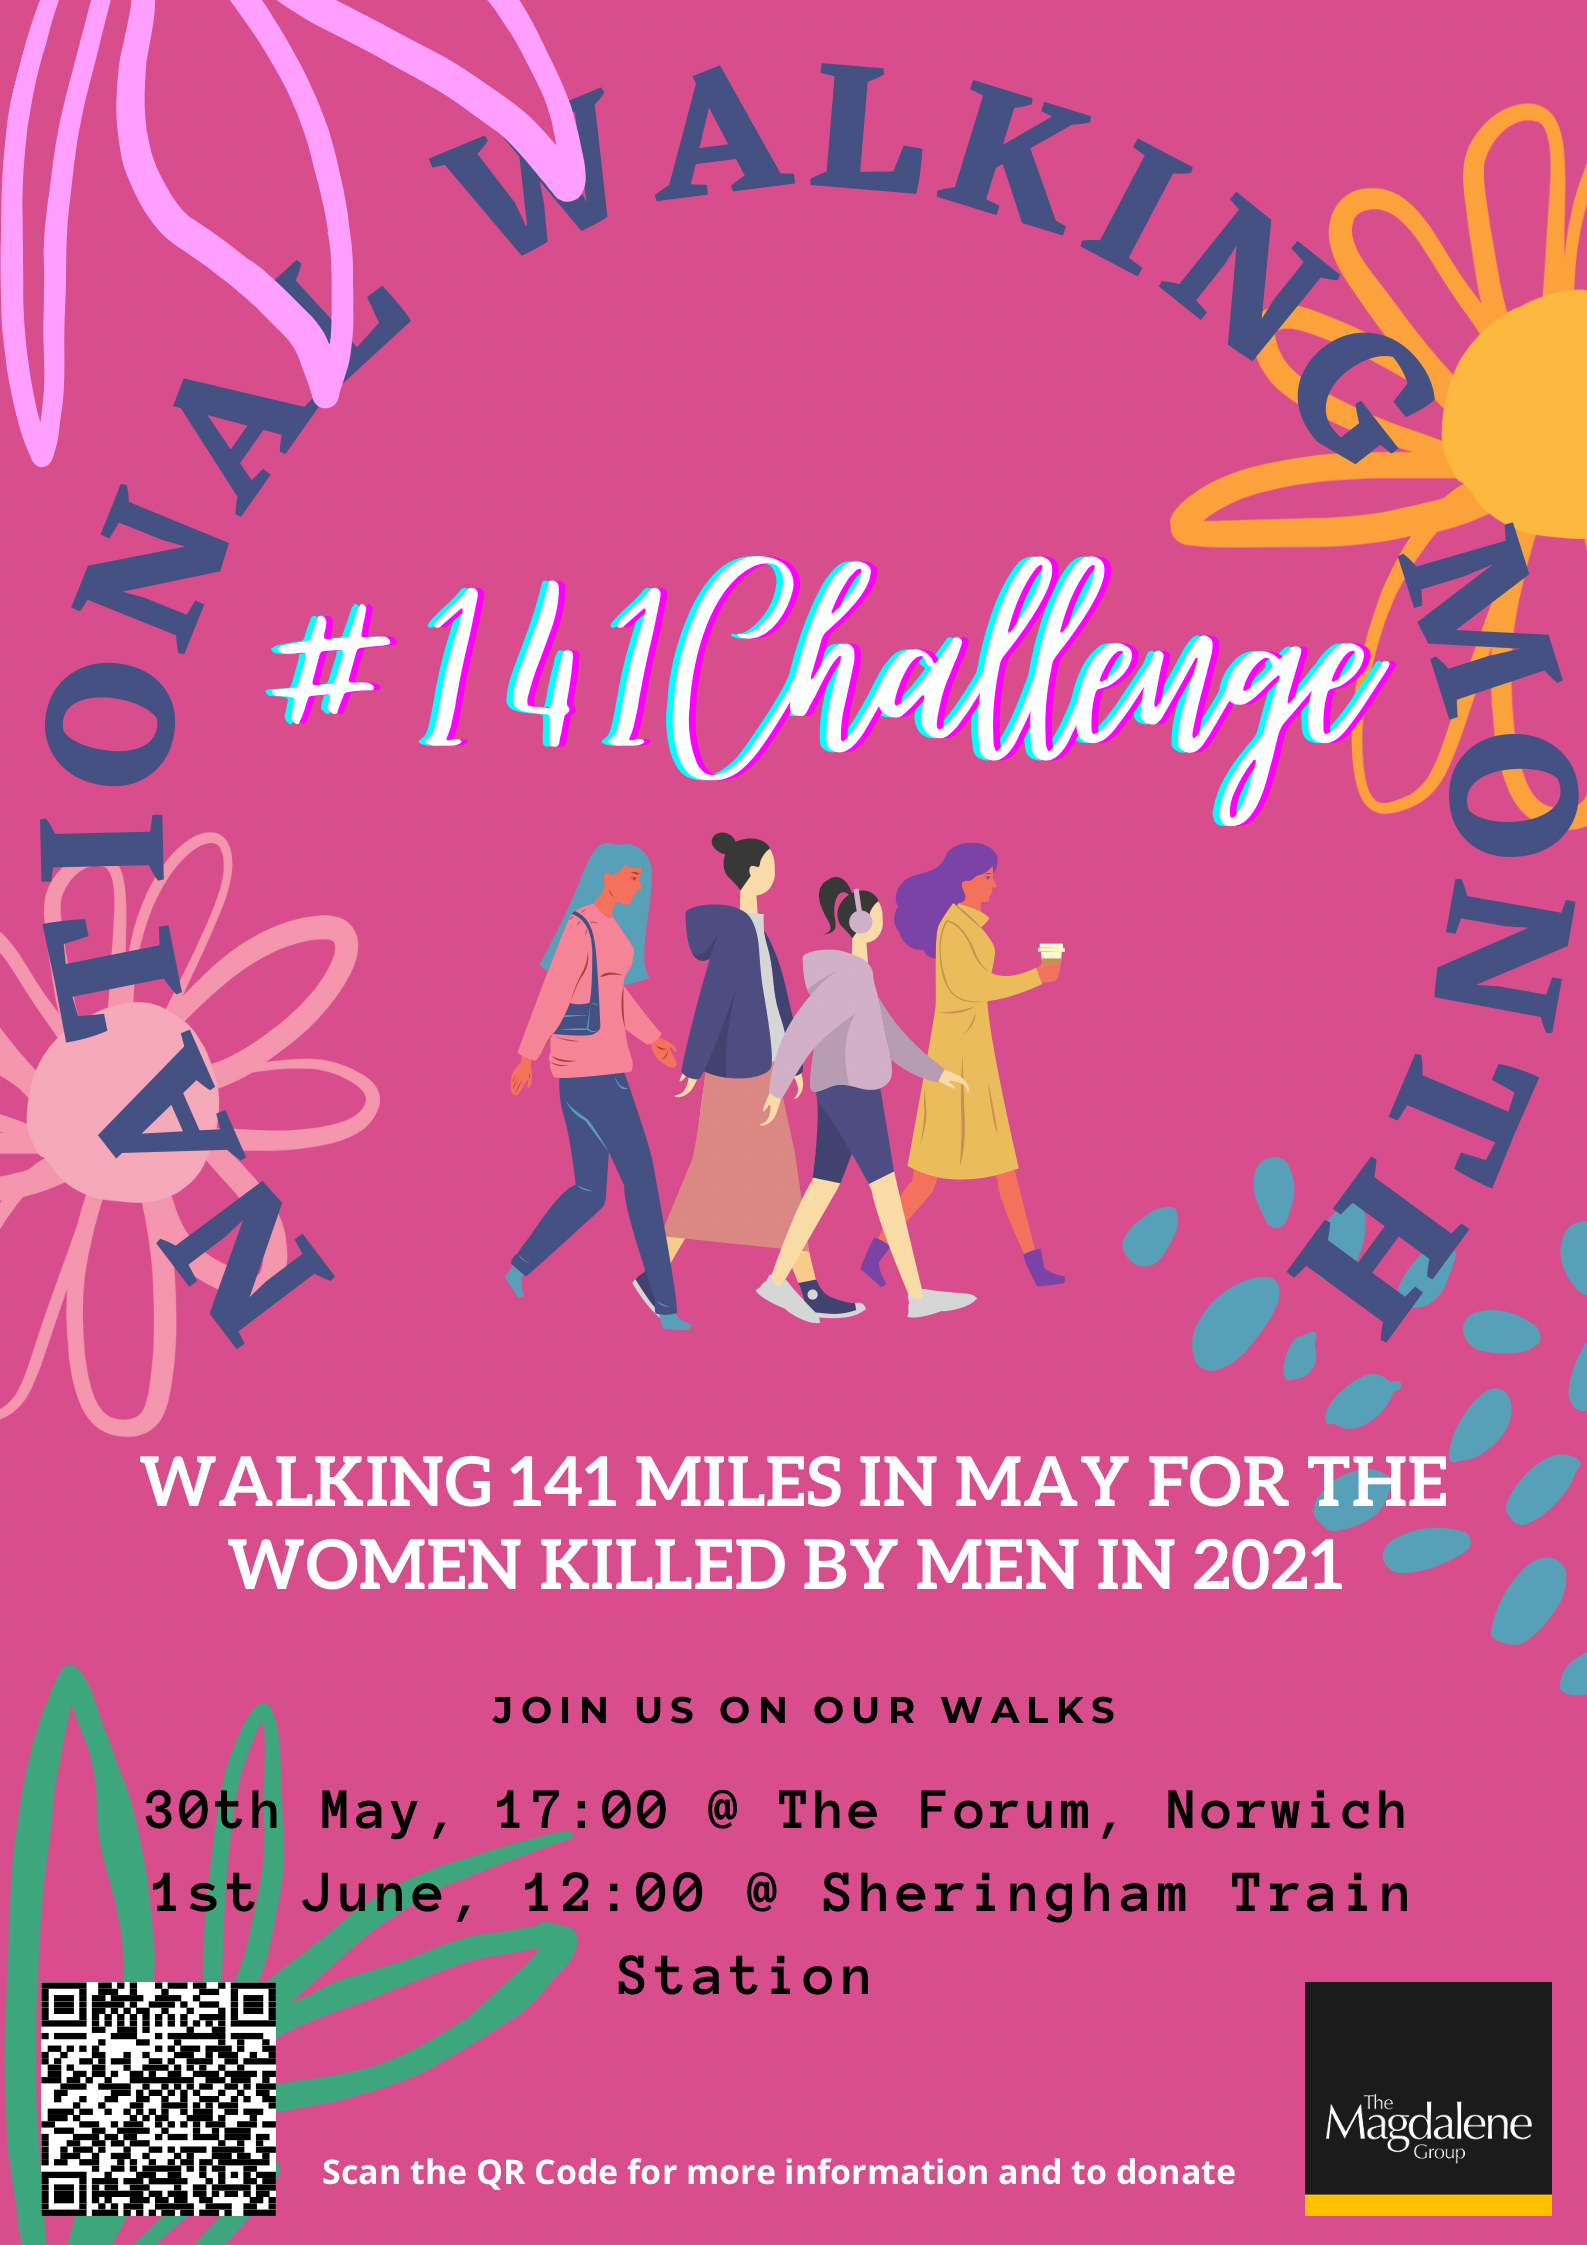 #141 Challenge